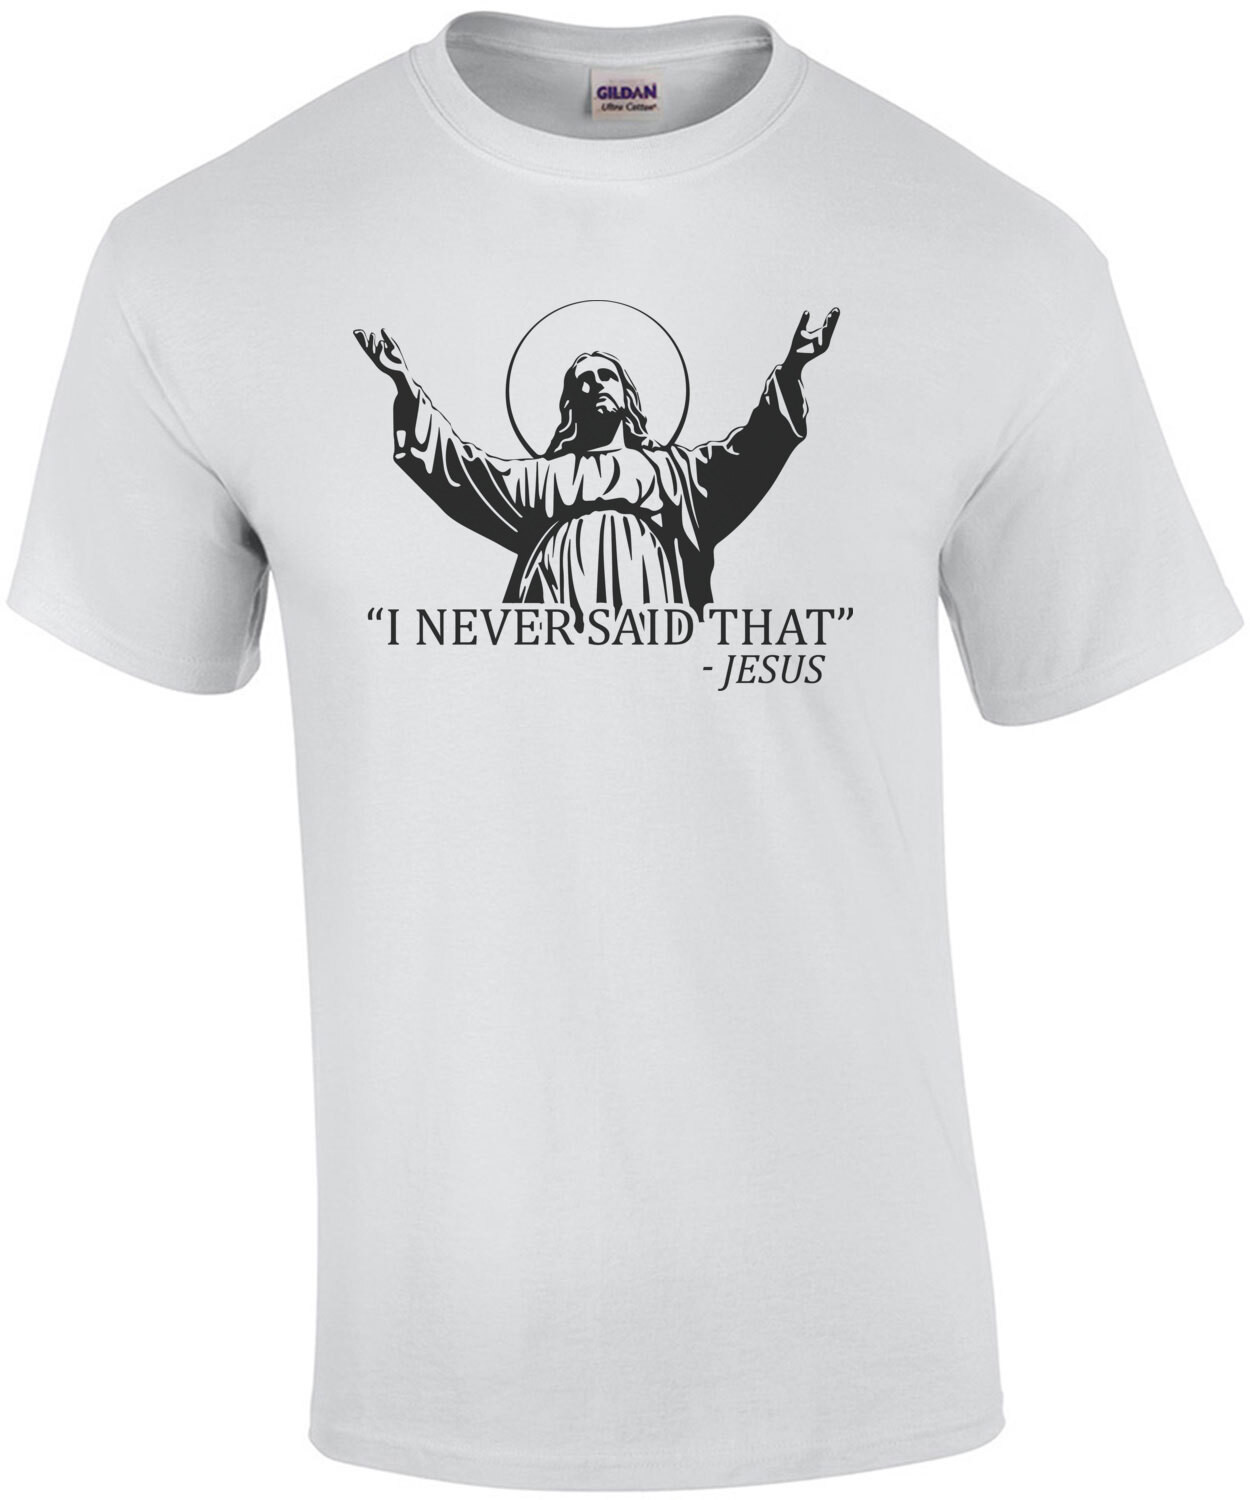 I never said that - Jesus - Funny religion t-shirt